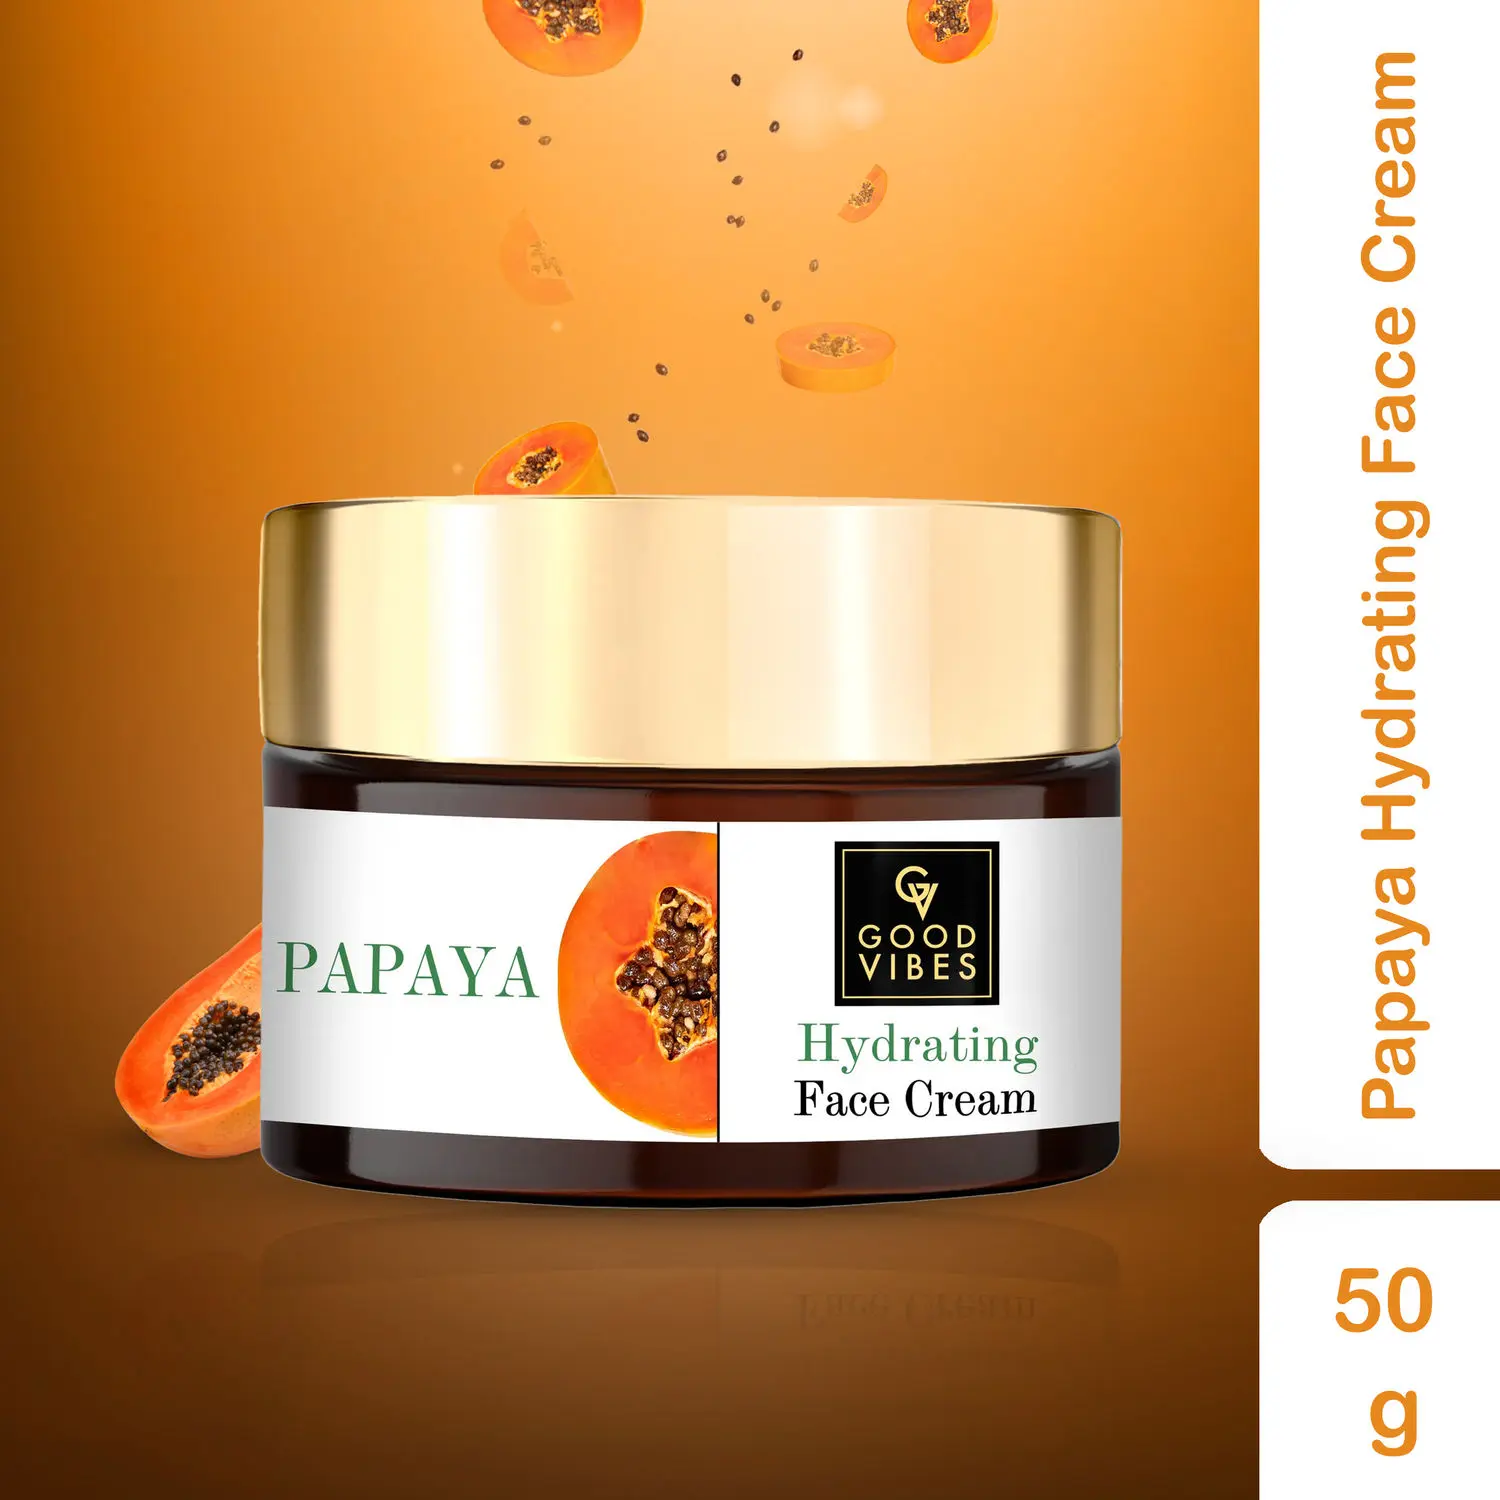 Good Vibes Papaya Hydrating Face Cream | Moisturizing, Glow | With Green Tea | No Parabens, No Sulphates, No Mineral Oil, No Animal Testing (50 g)